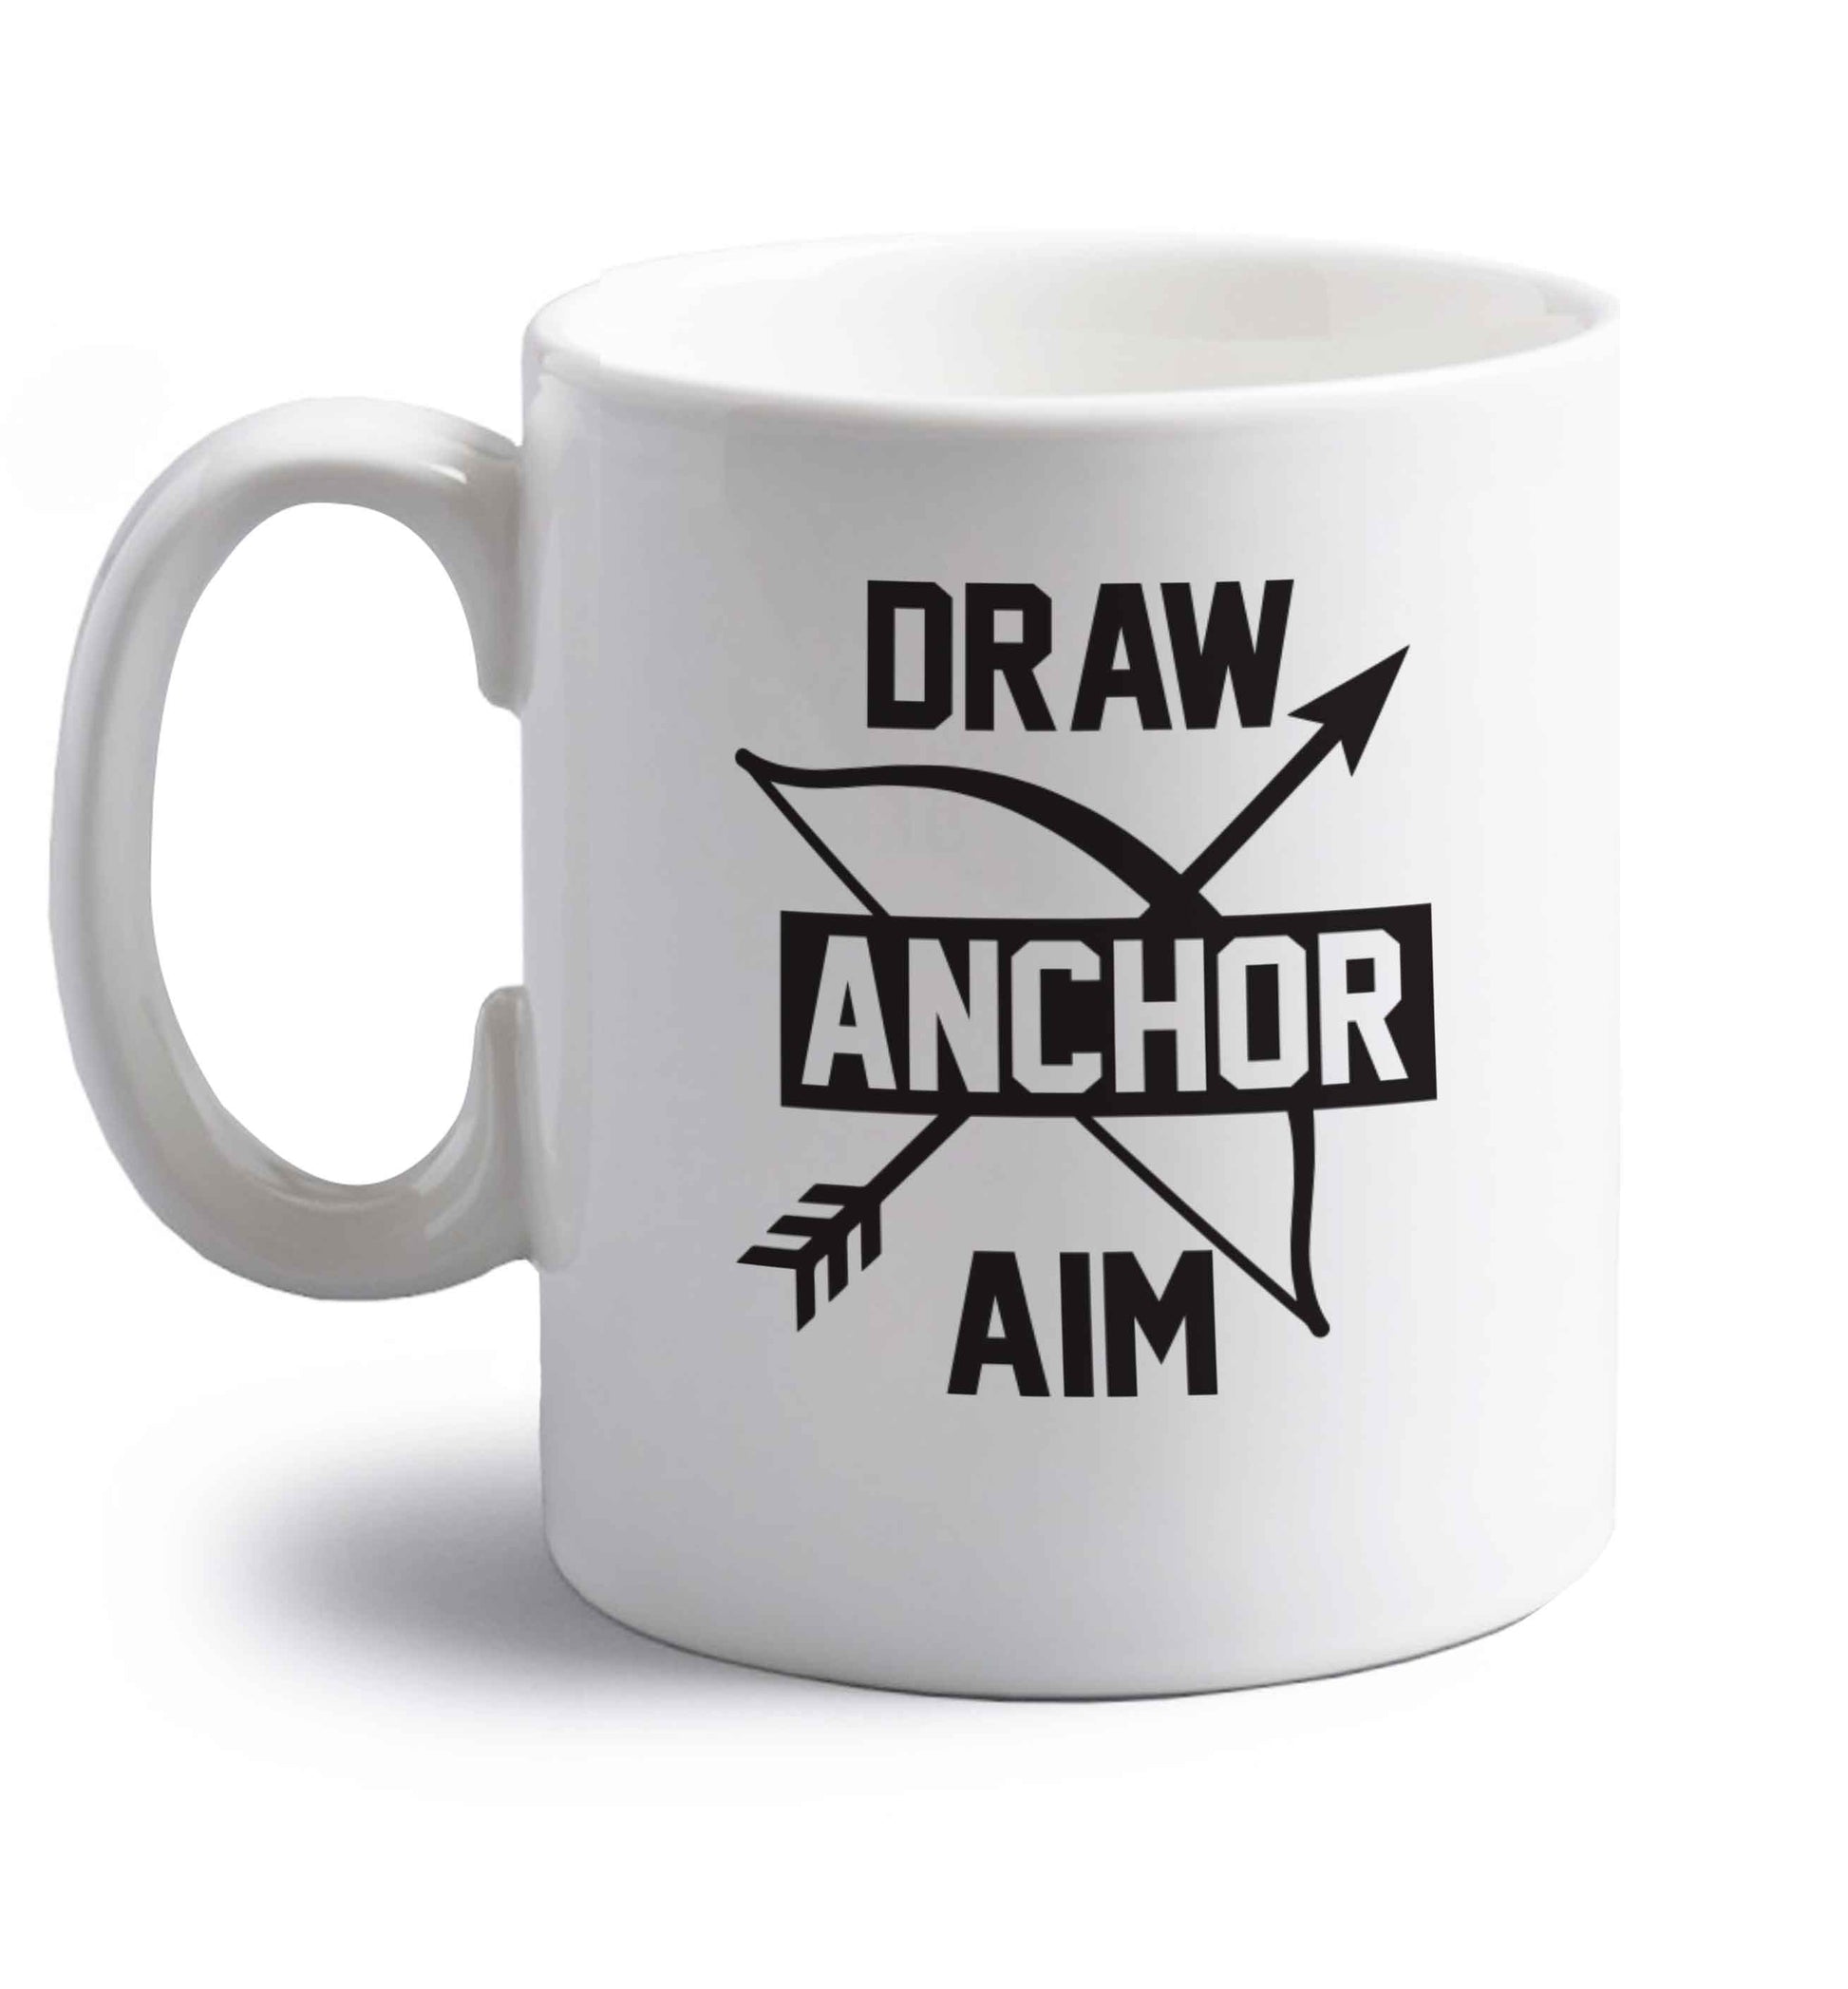 Draw anchor aim right handed white ceramic mug 